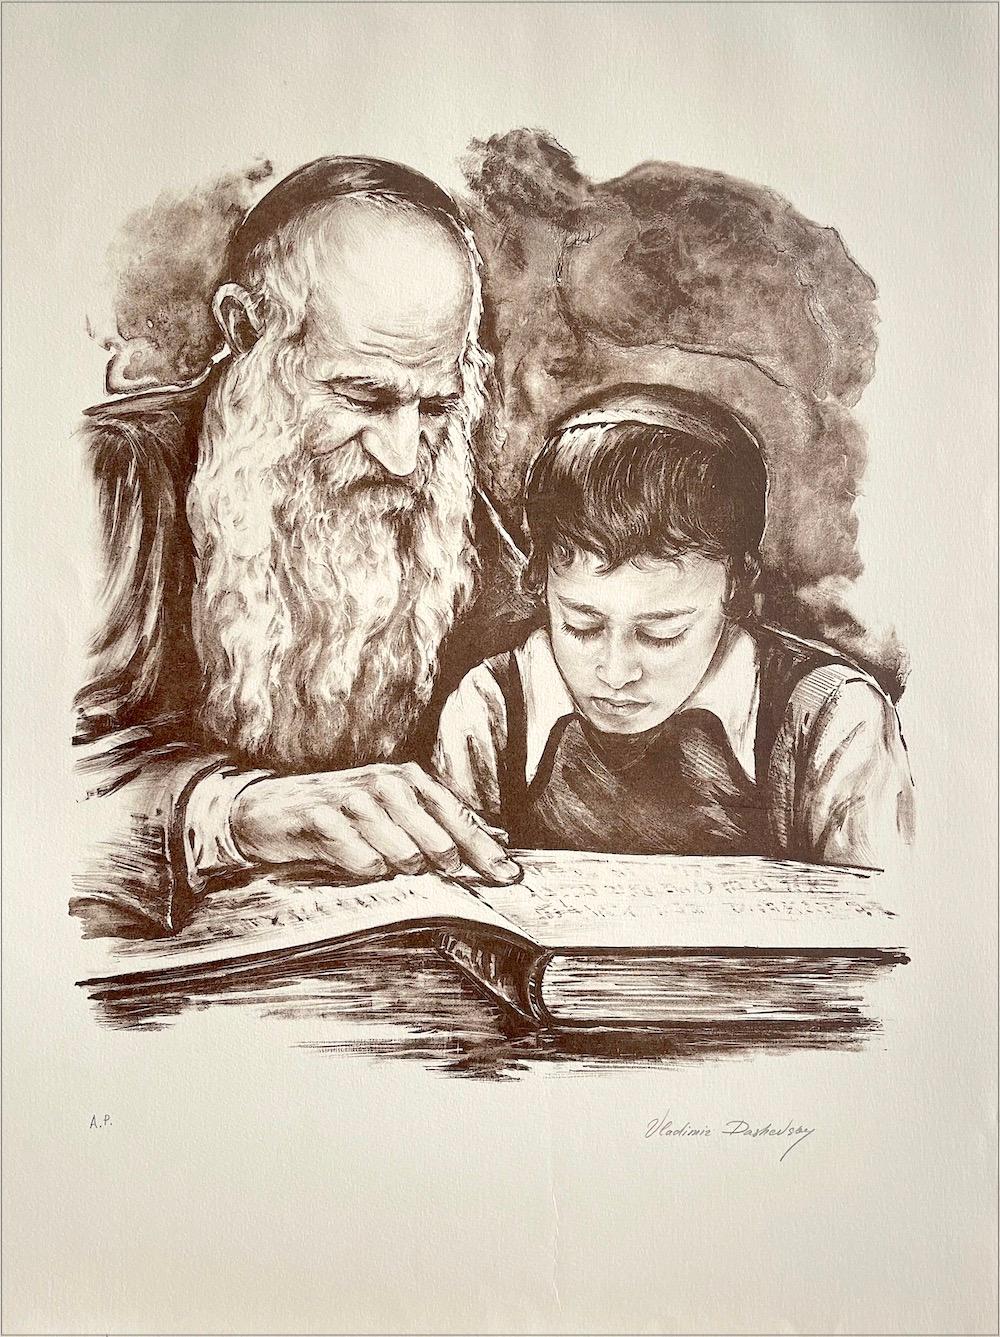 Vladimir Dashevsky Portrait Print - RABBI TEACHING Signed Lithograph, Rabbi and Young Boy, Jewish Art, Judaism